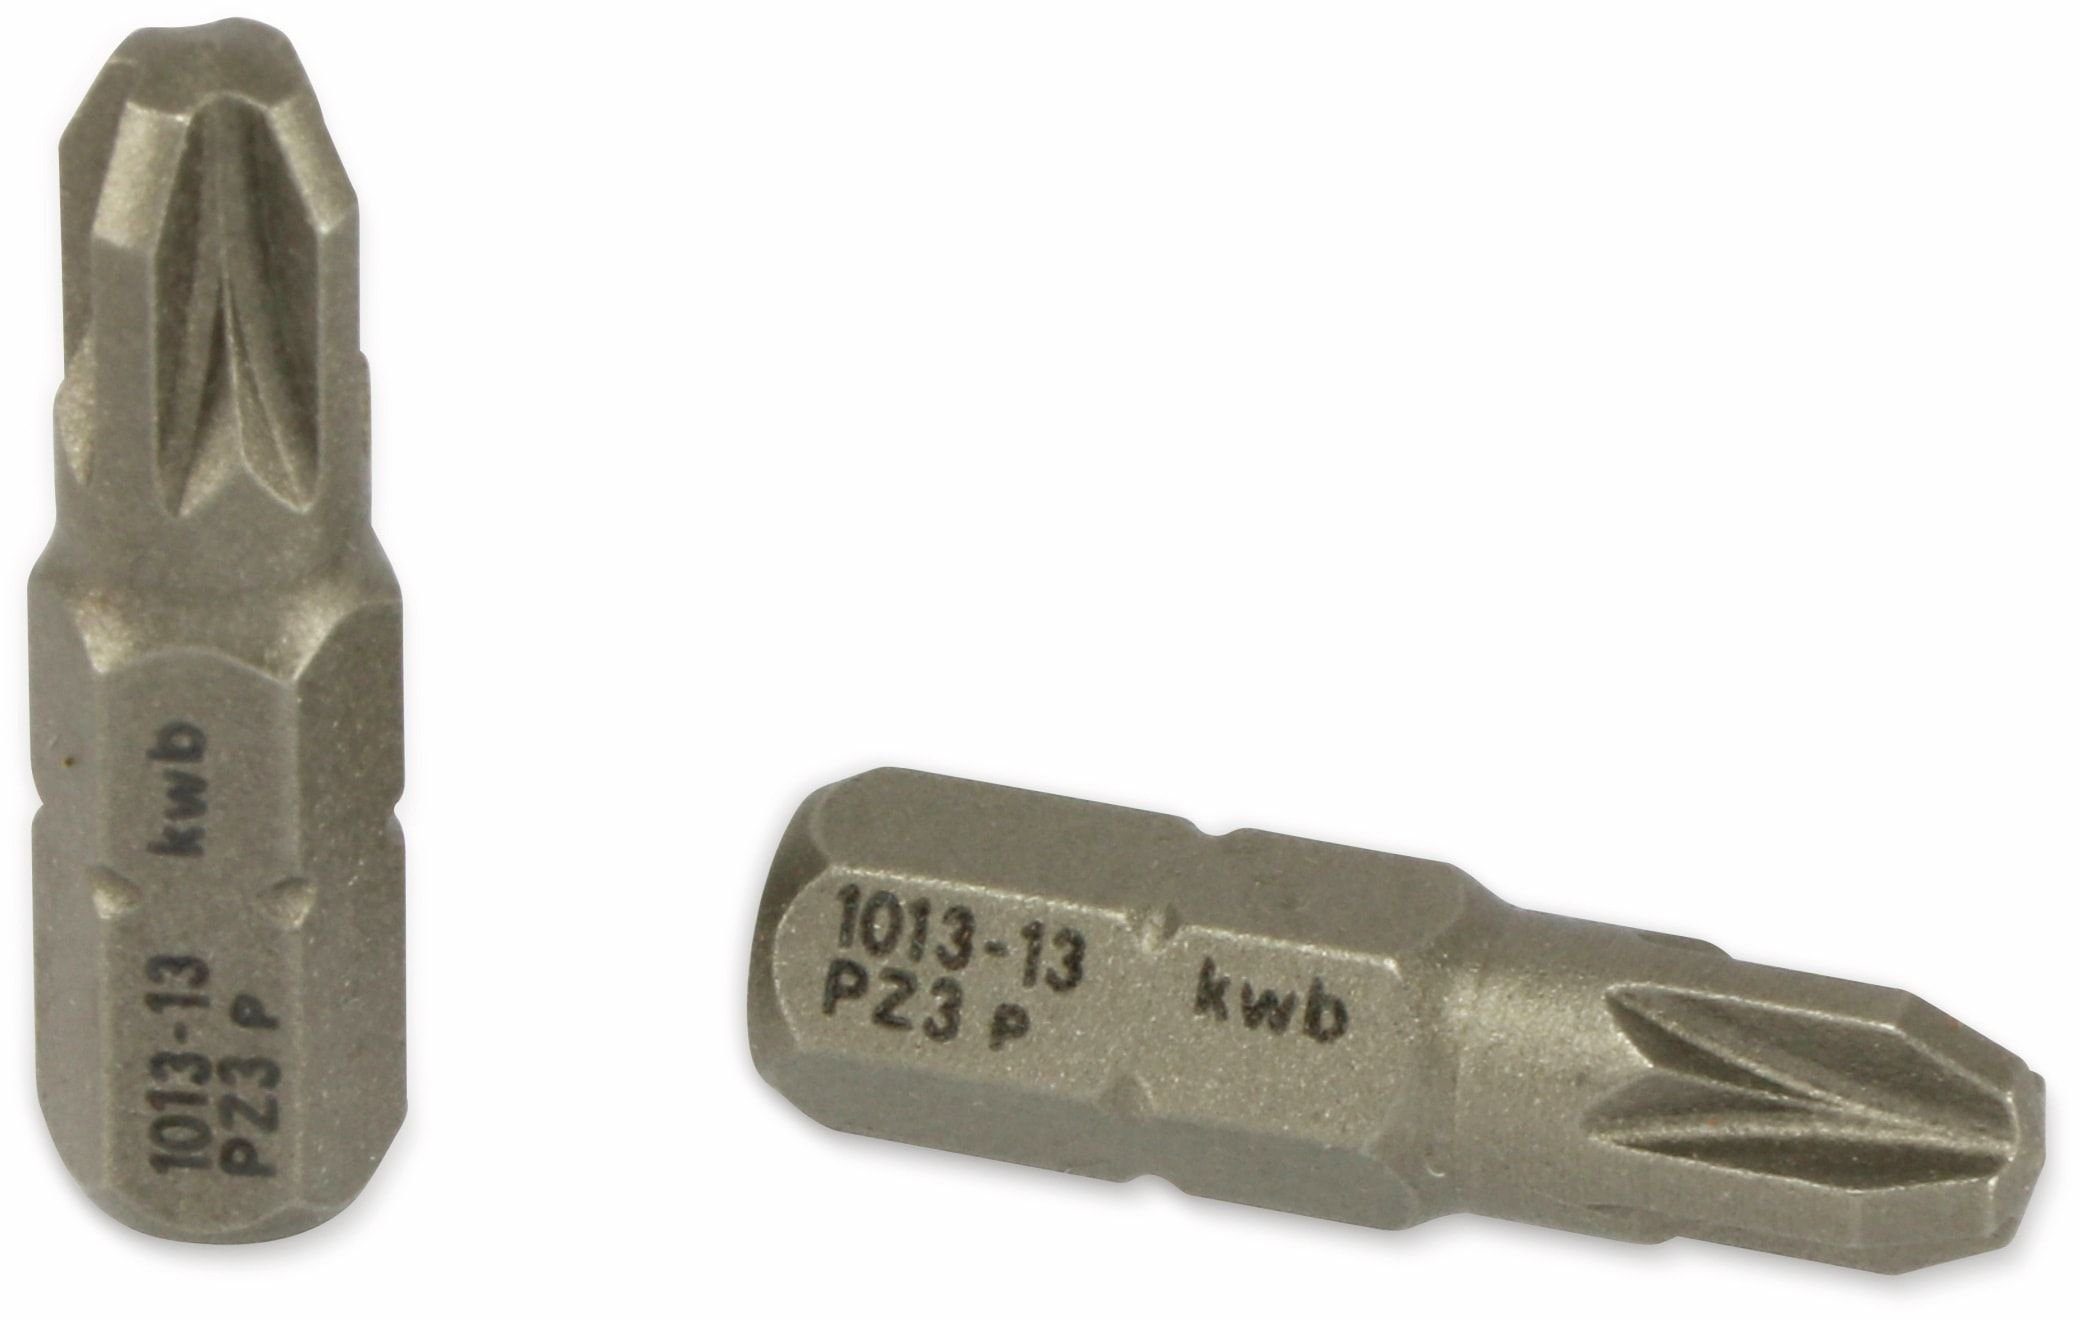 Stück Chrom-Vanadium Stahl, 10 Bohrer- KWB kwb Bitset Bit-Set, PZ3, und